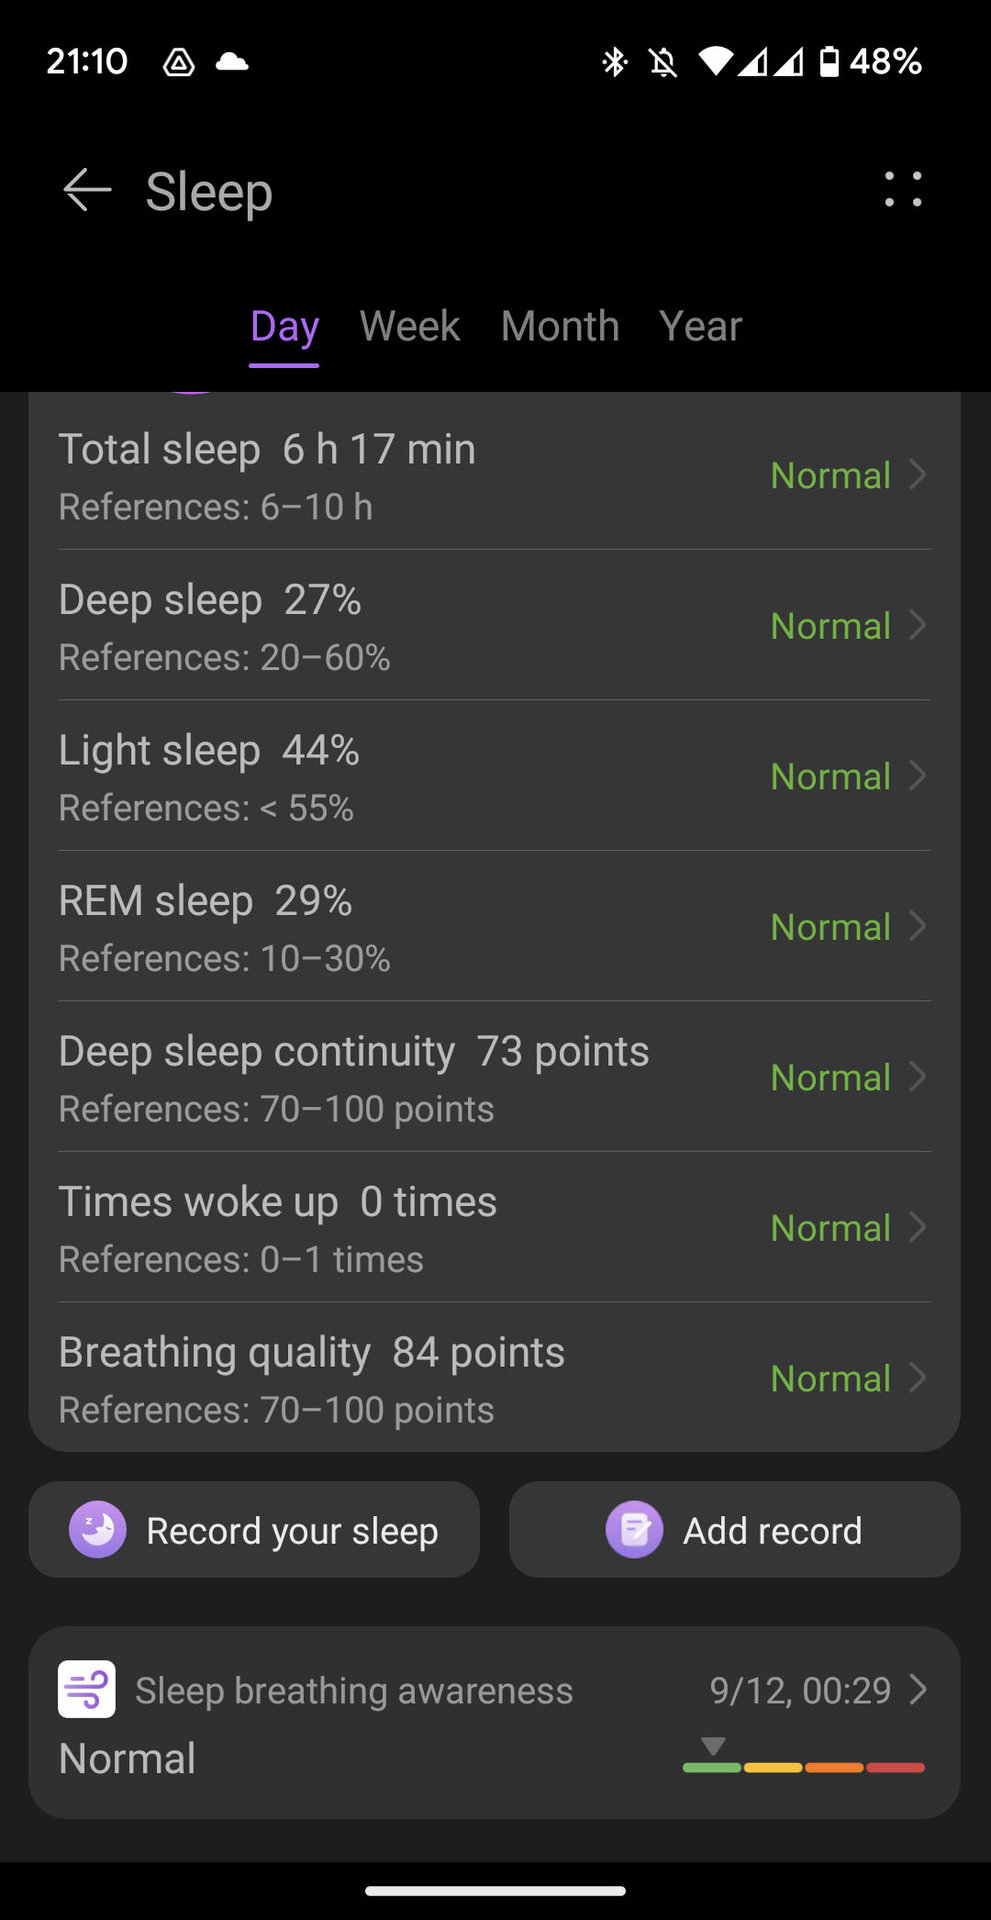 Huawei Health sleep cycle analysis and breathing awareness score